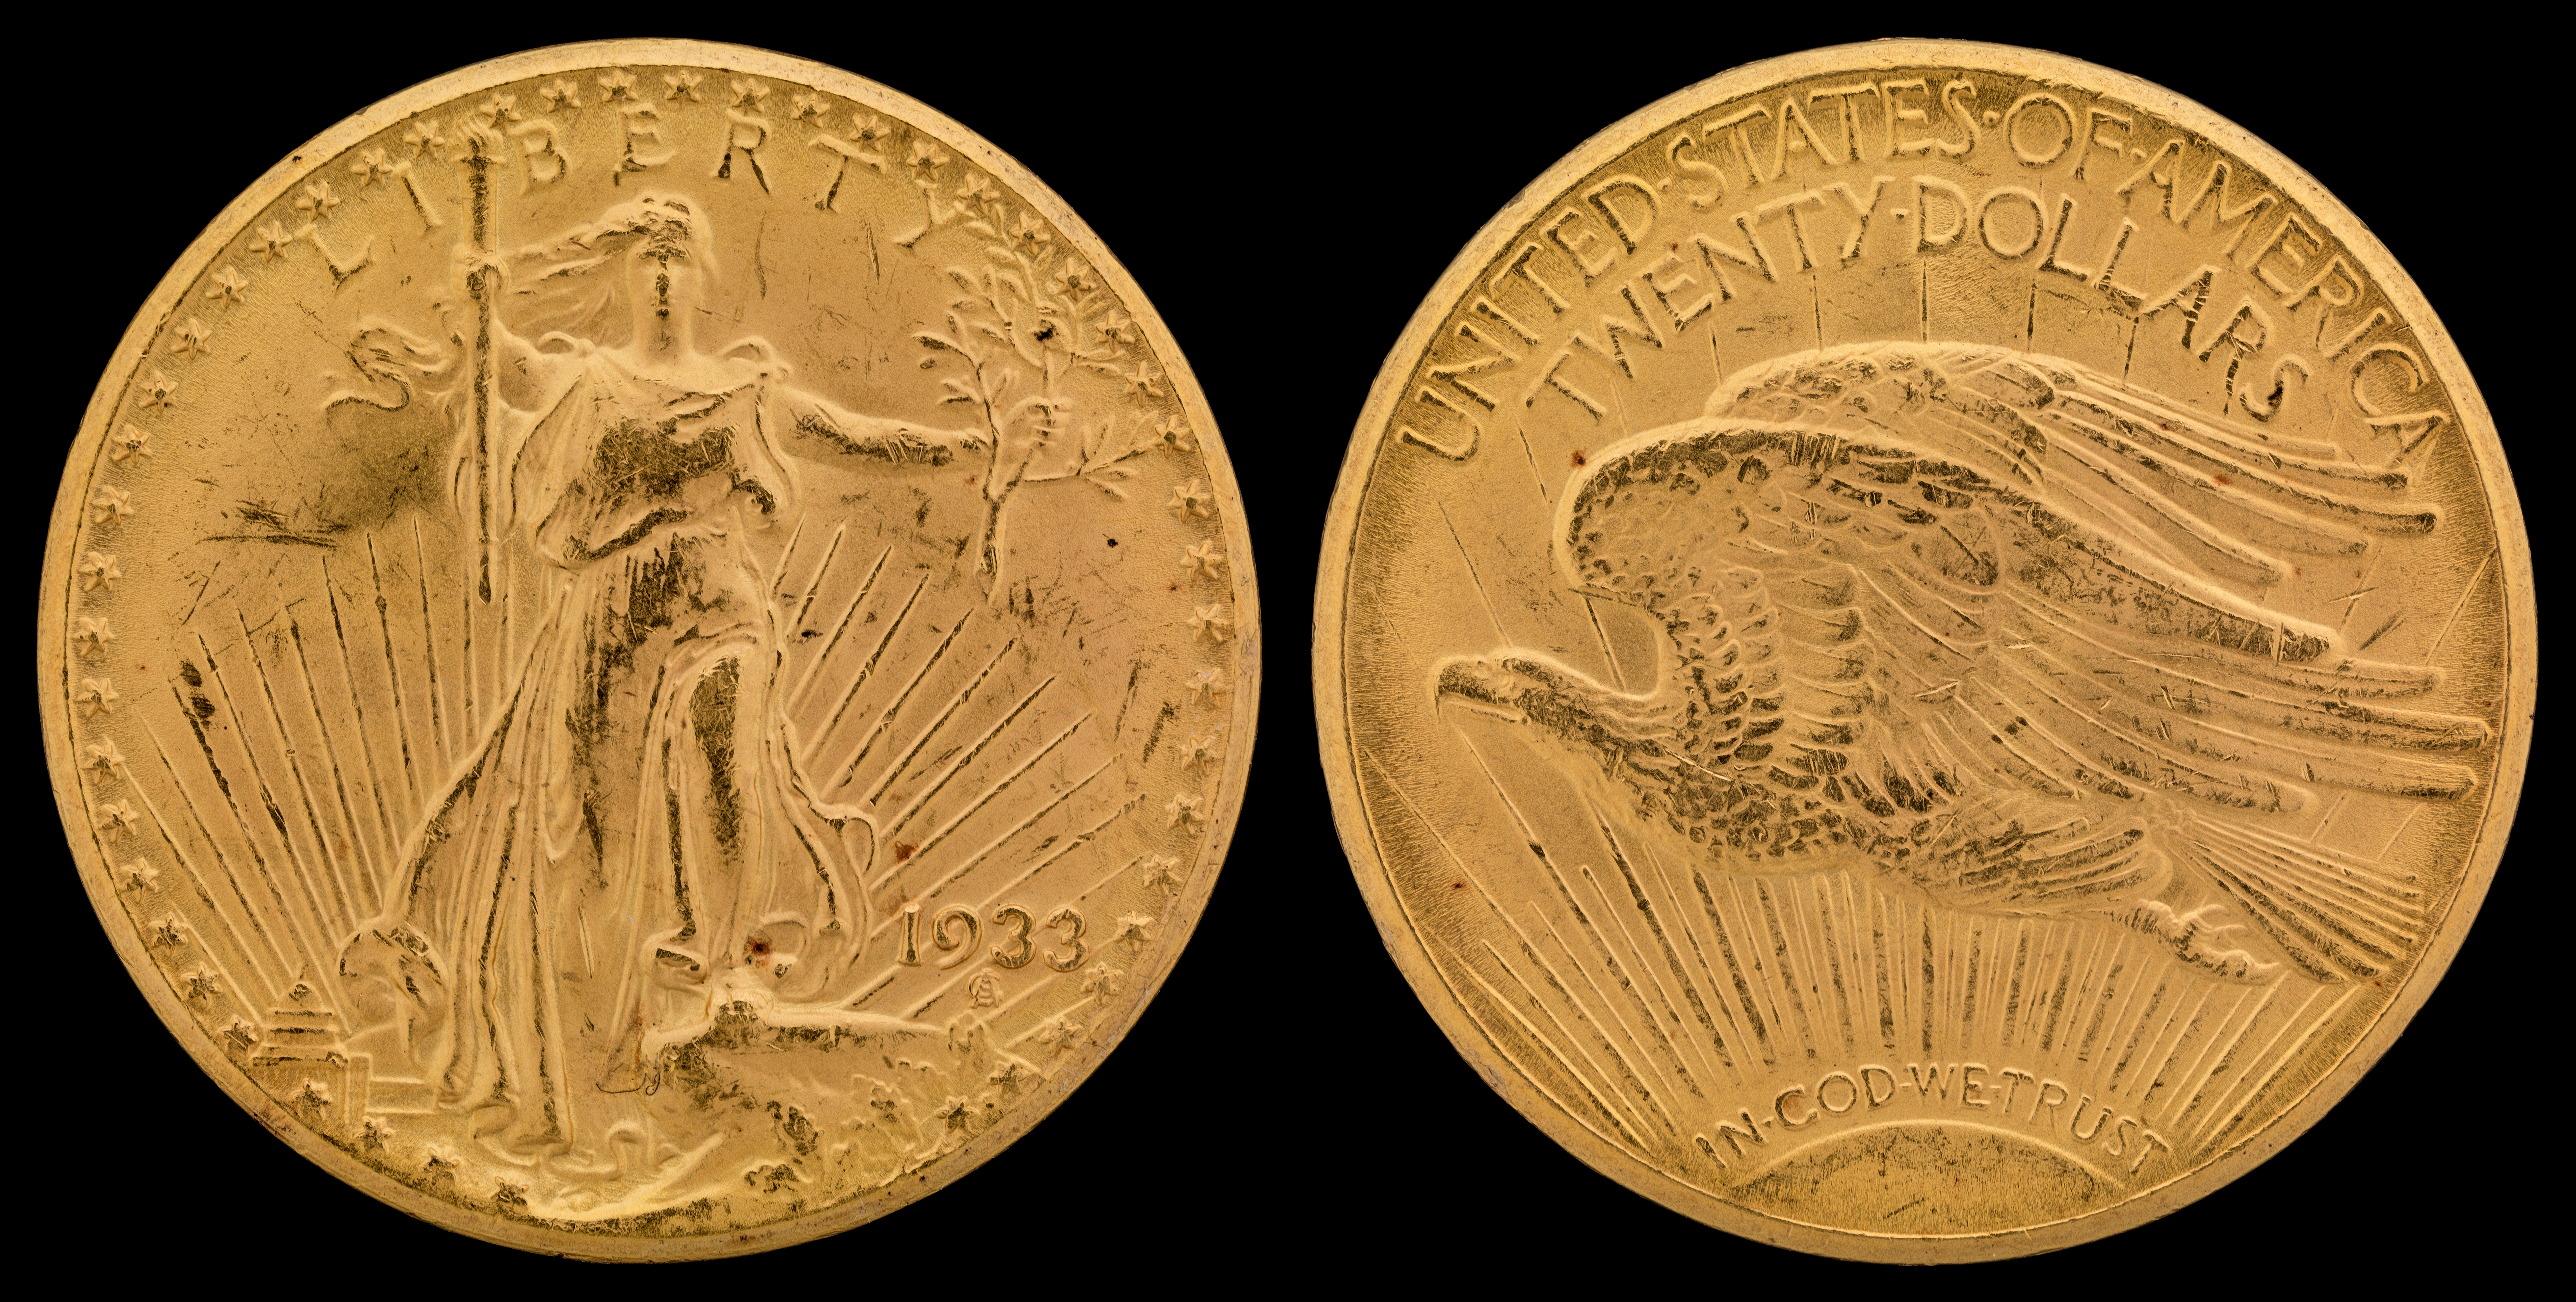 Saint-Gaudens double eagle - Wikipedia